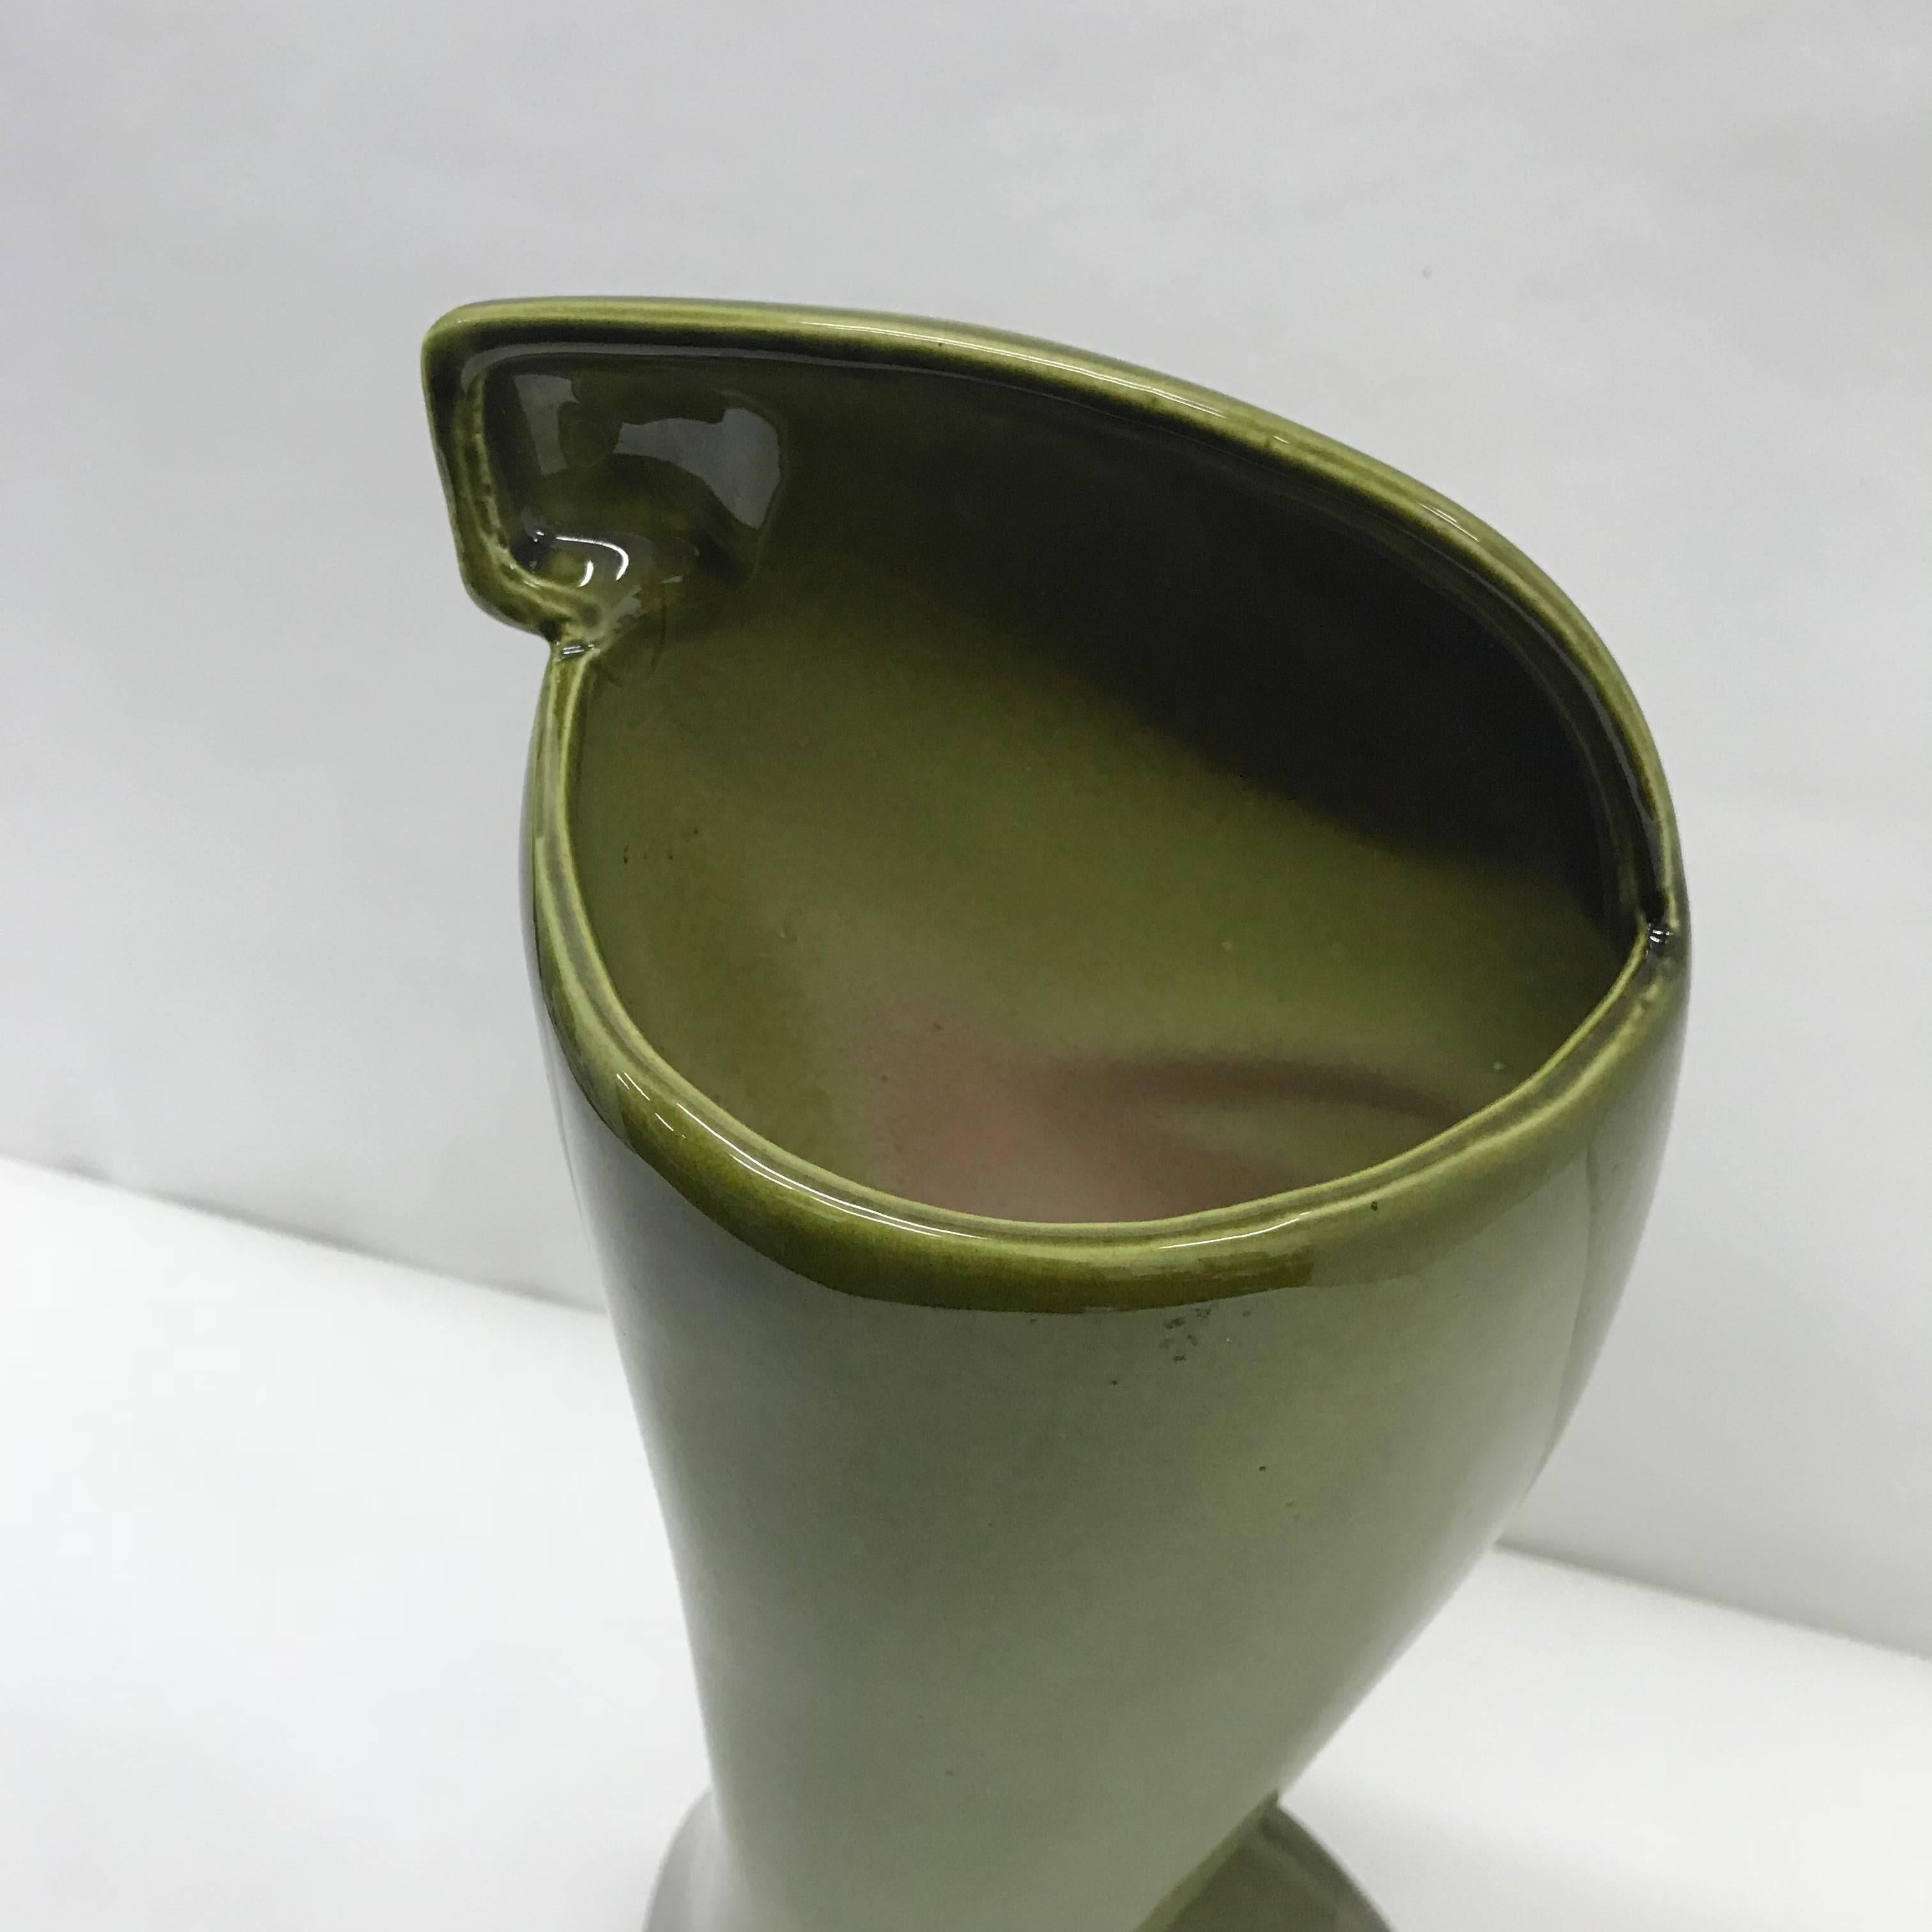 Luxembourgish Art Deco Green Ceramic Vase, circa 1940